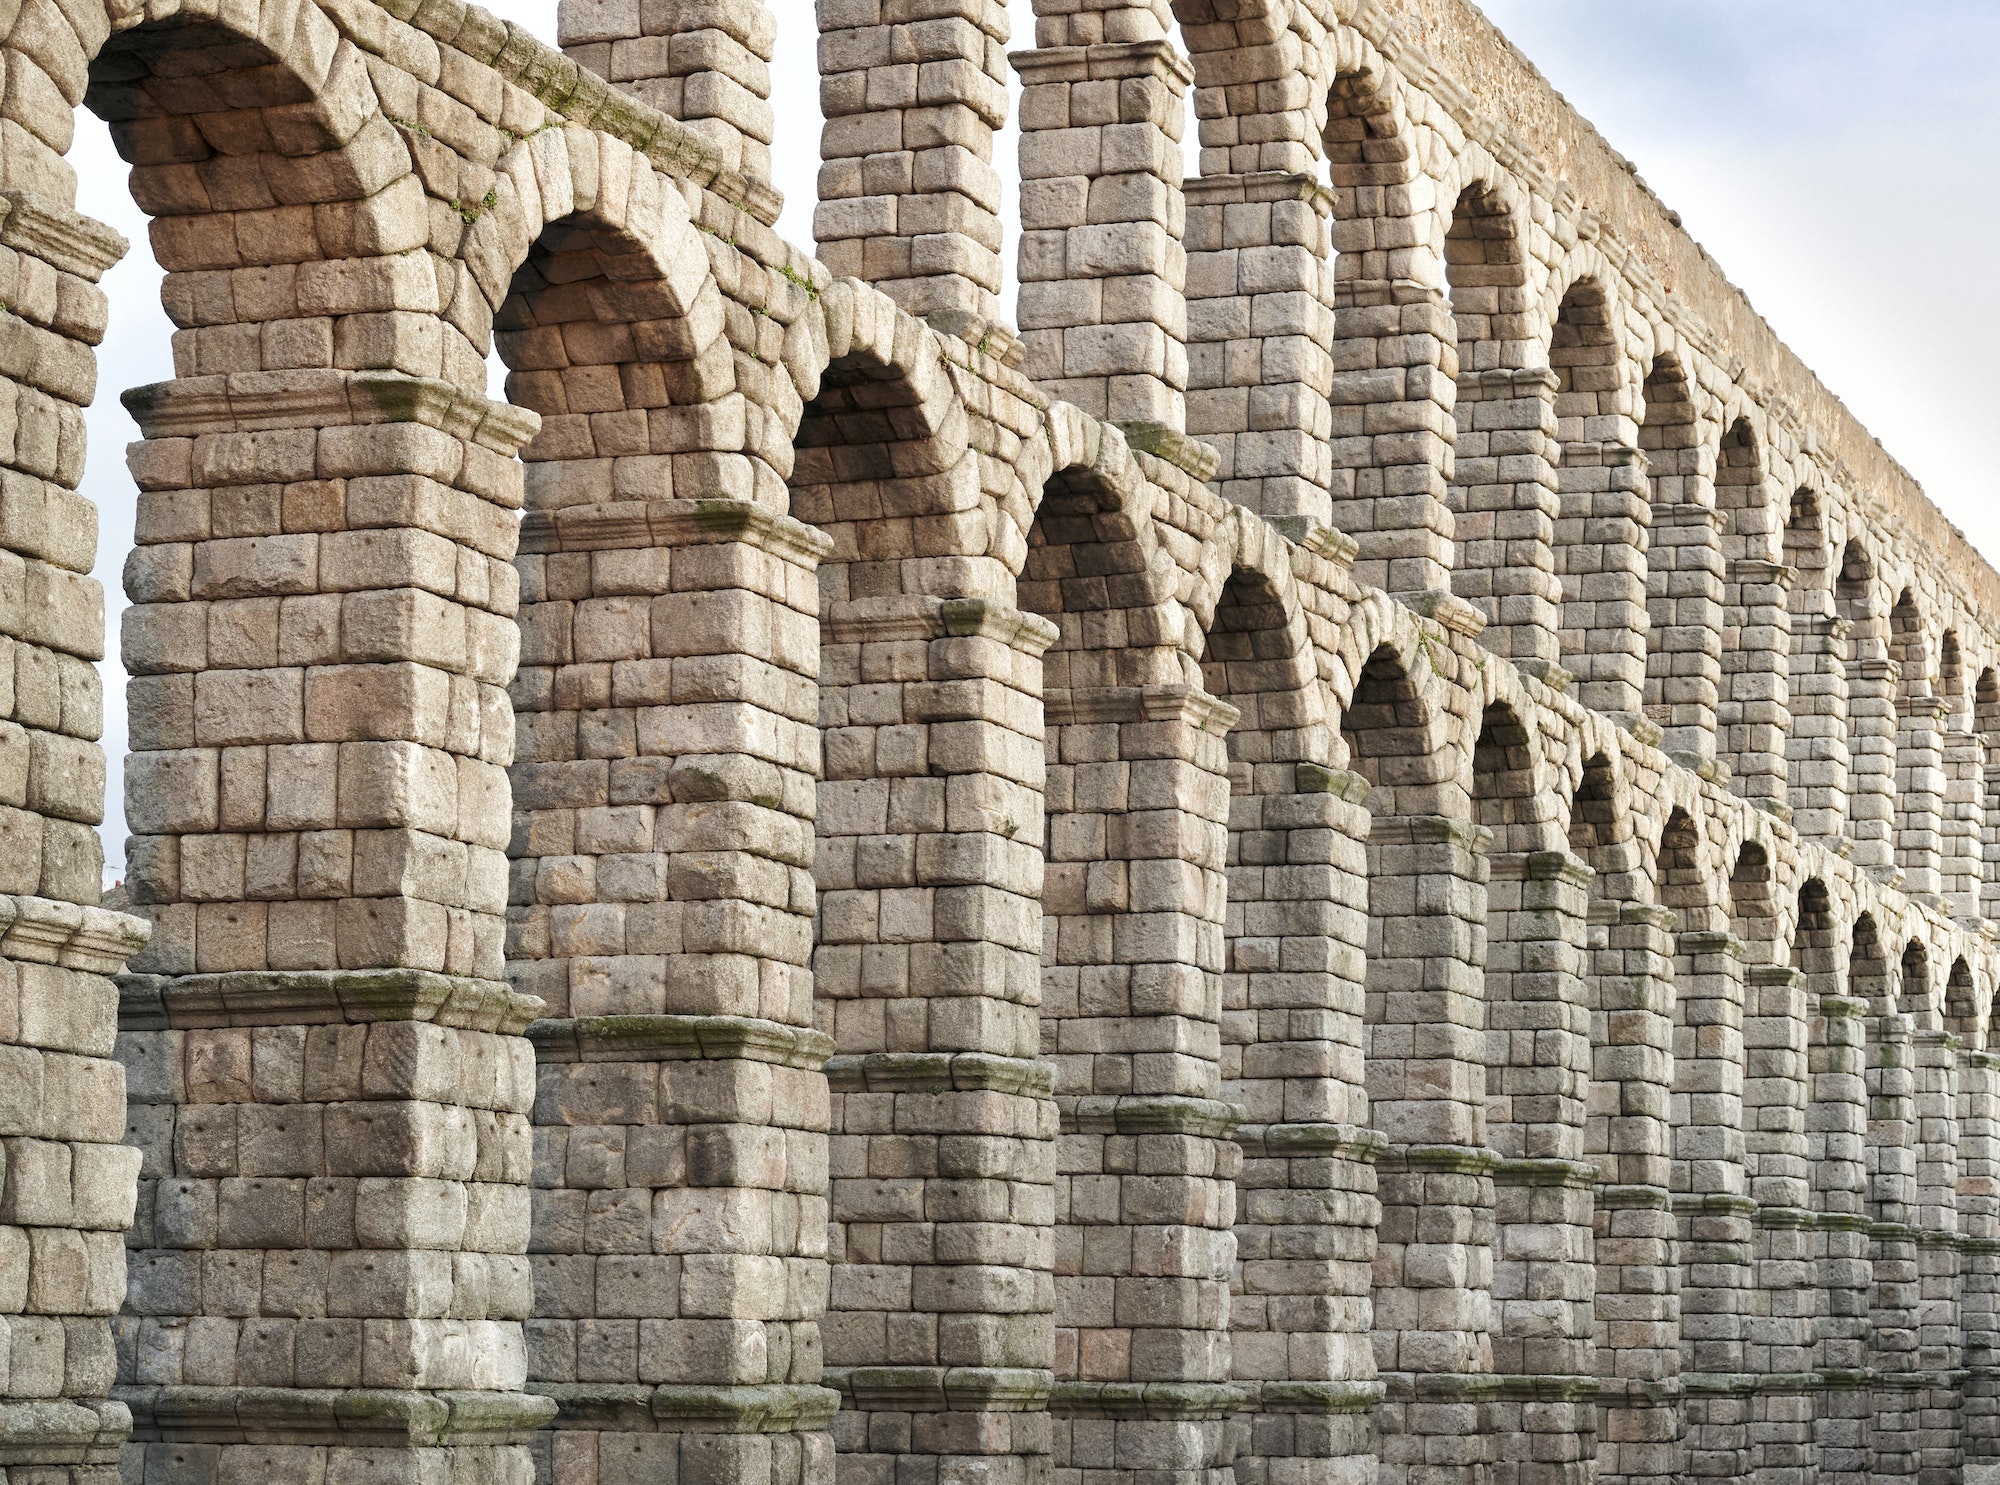 Aqueduct of Segovia, Spain